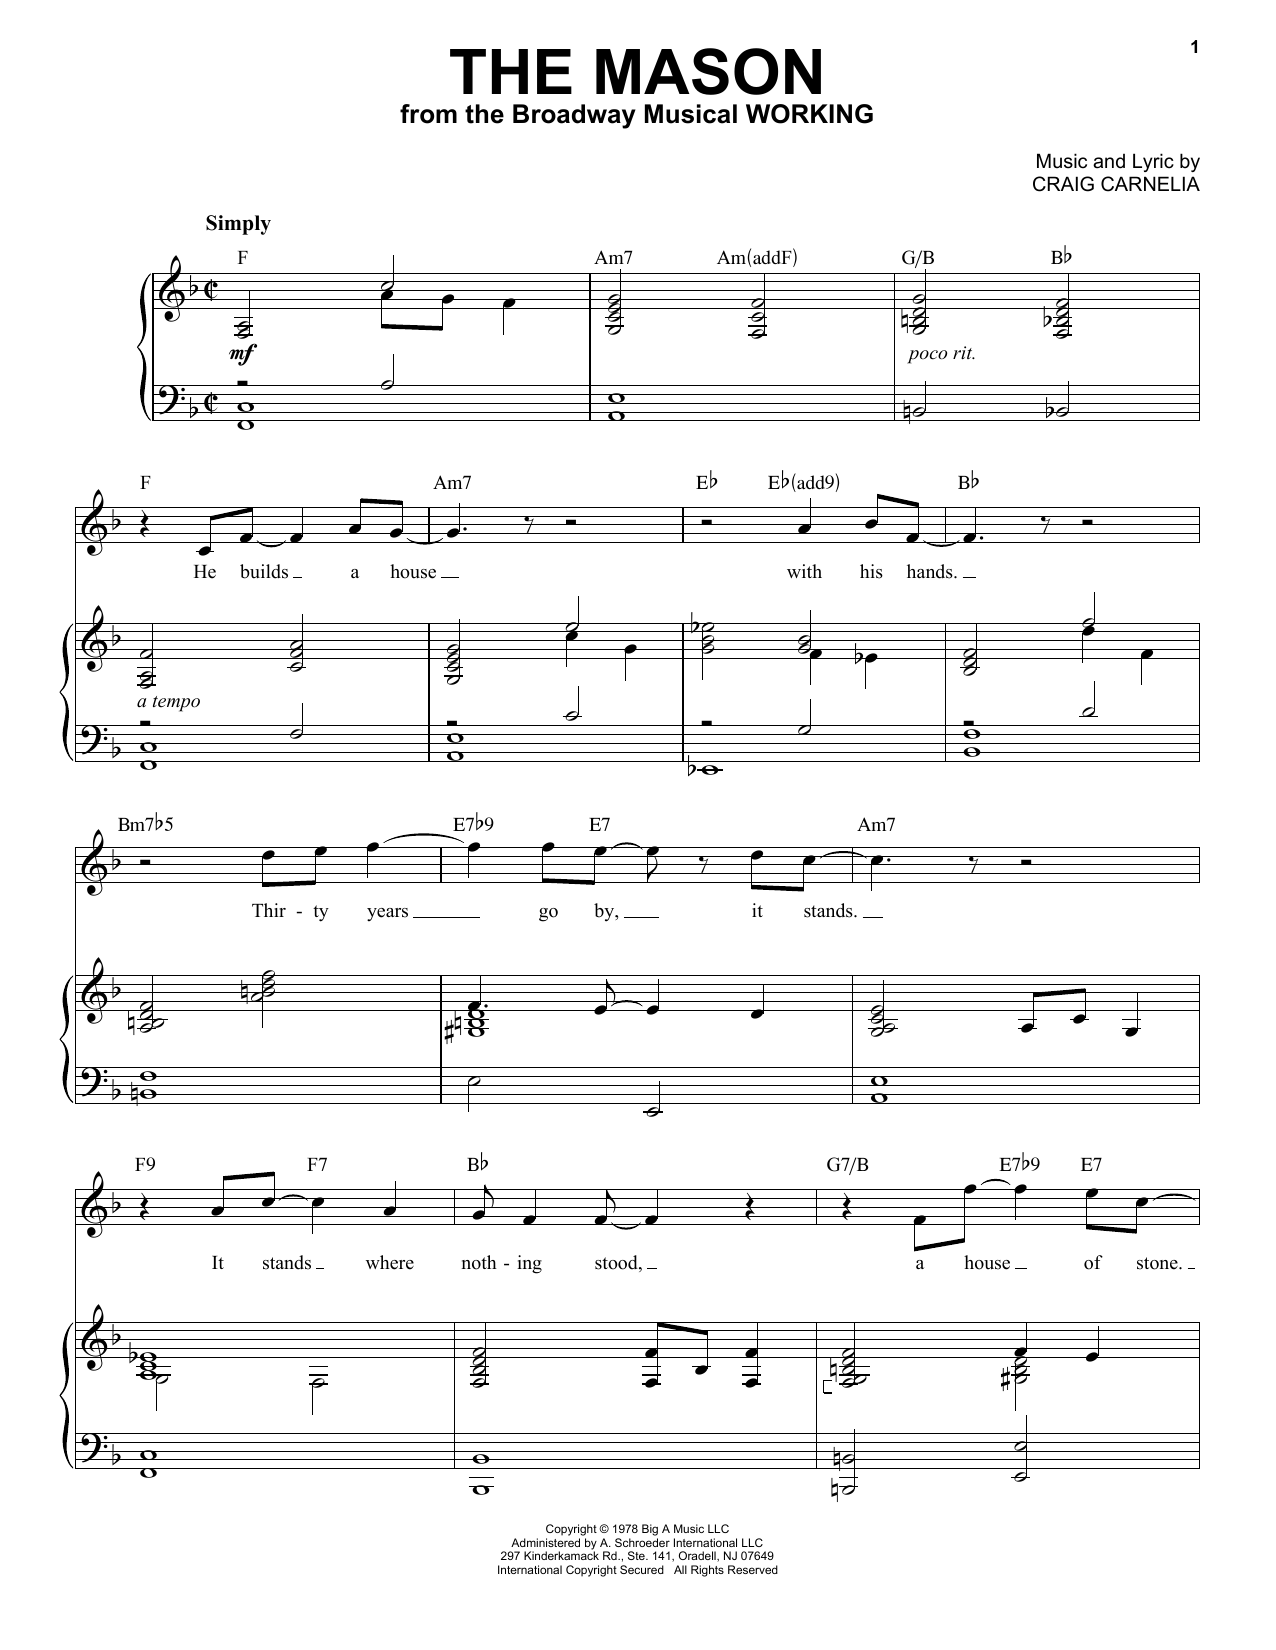 Craig Carnelia The Mason Sheet Music Notes & Chords for Melody Line, Lyrics & Chords - Download or Print PDF